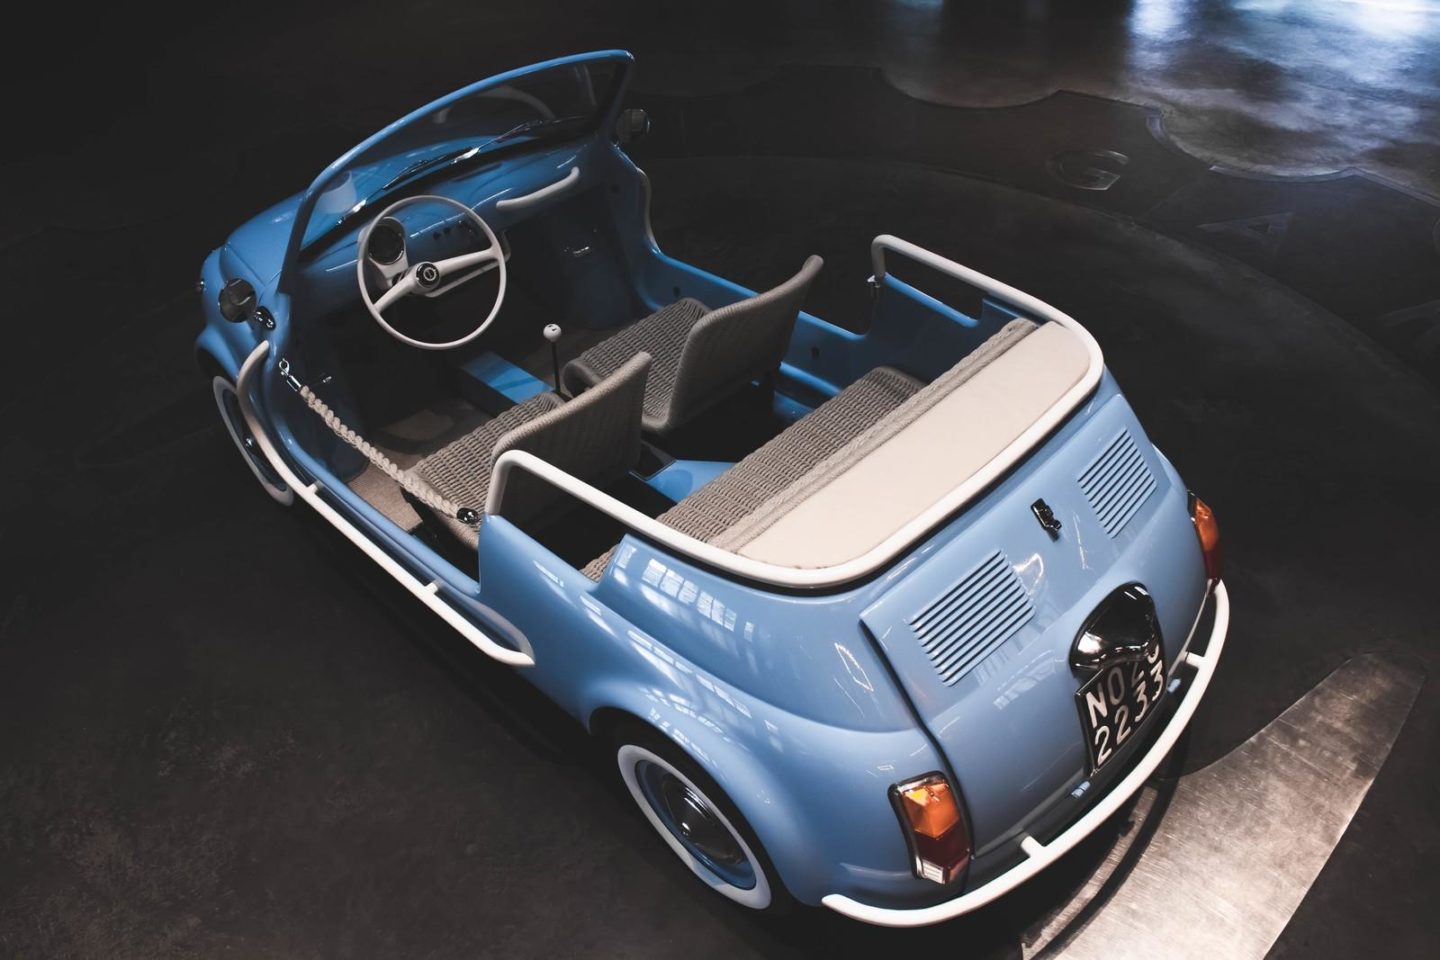 Fiat 500 jolly icon-e